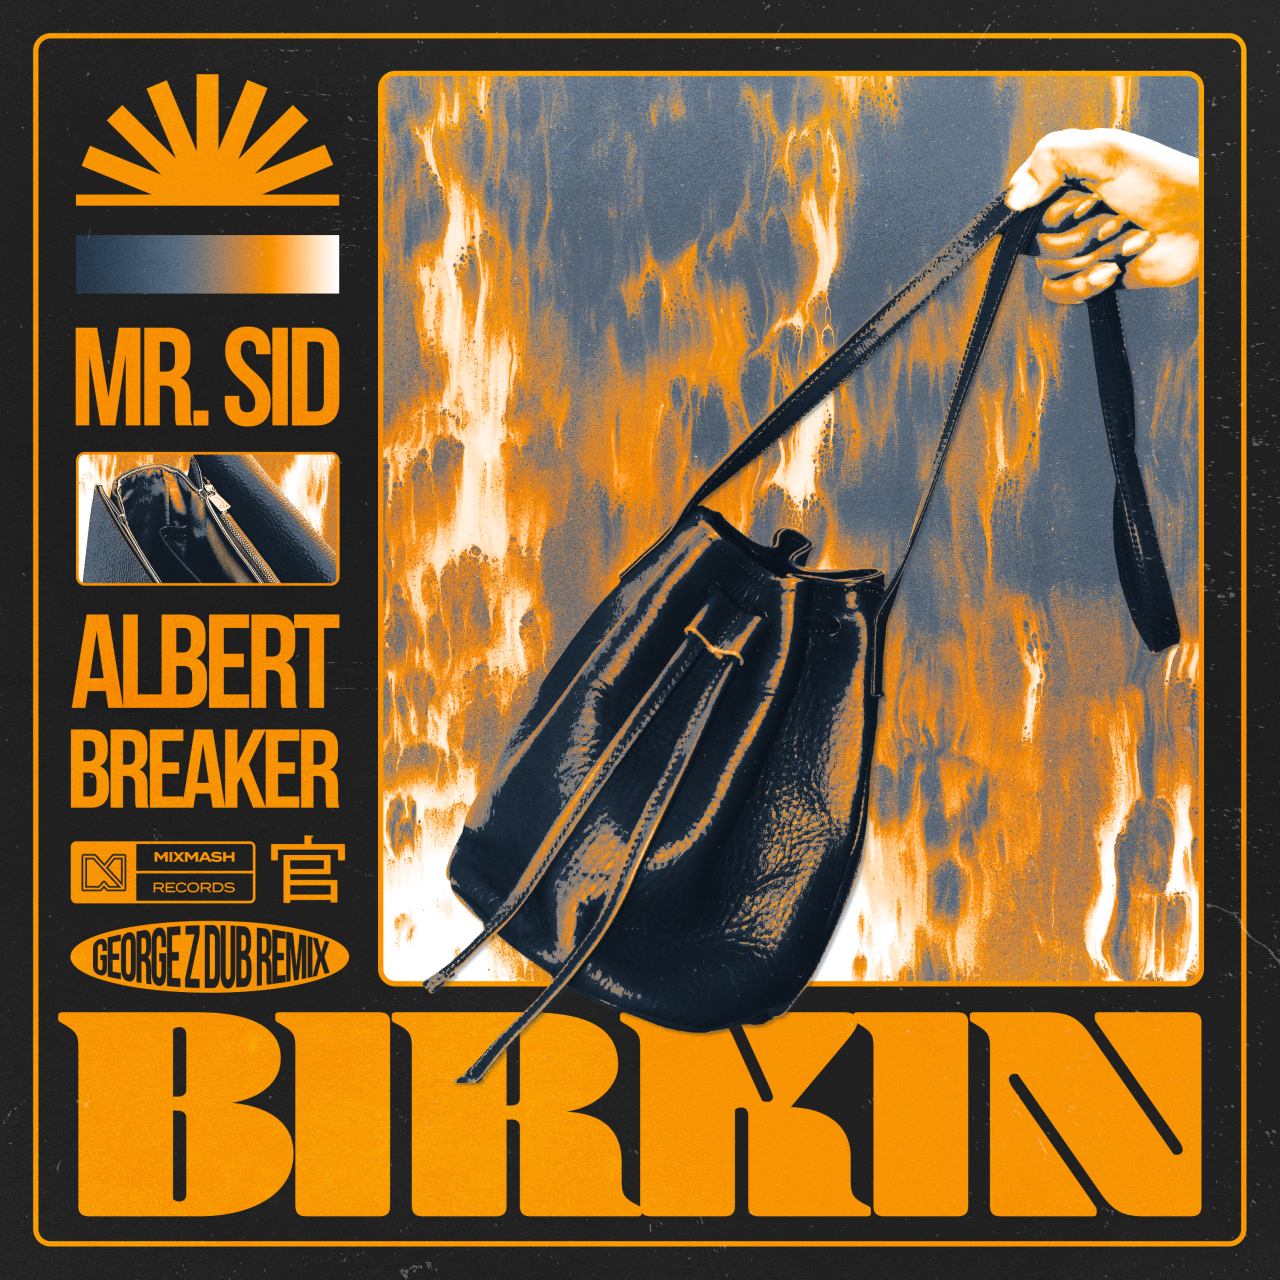 Birkin (George Z Dub Remix) 